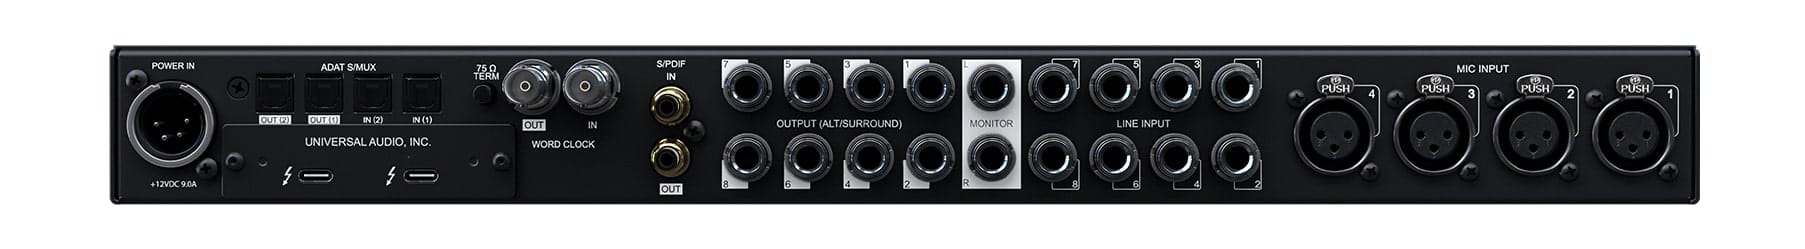 Universal Audio | Apollo x8 Heritage Edition 18 x 24 Thunderbolt 3 Audio Interface with UAD DSP